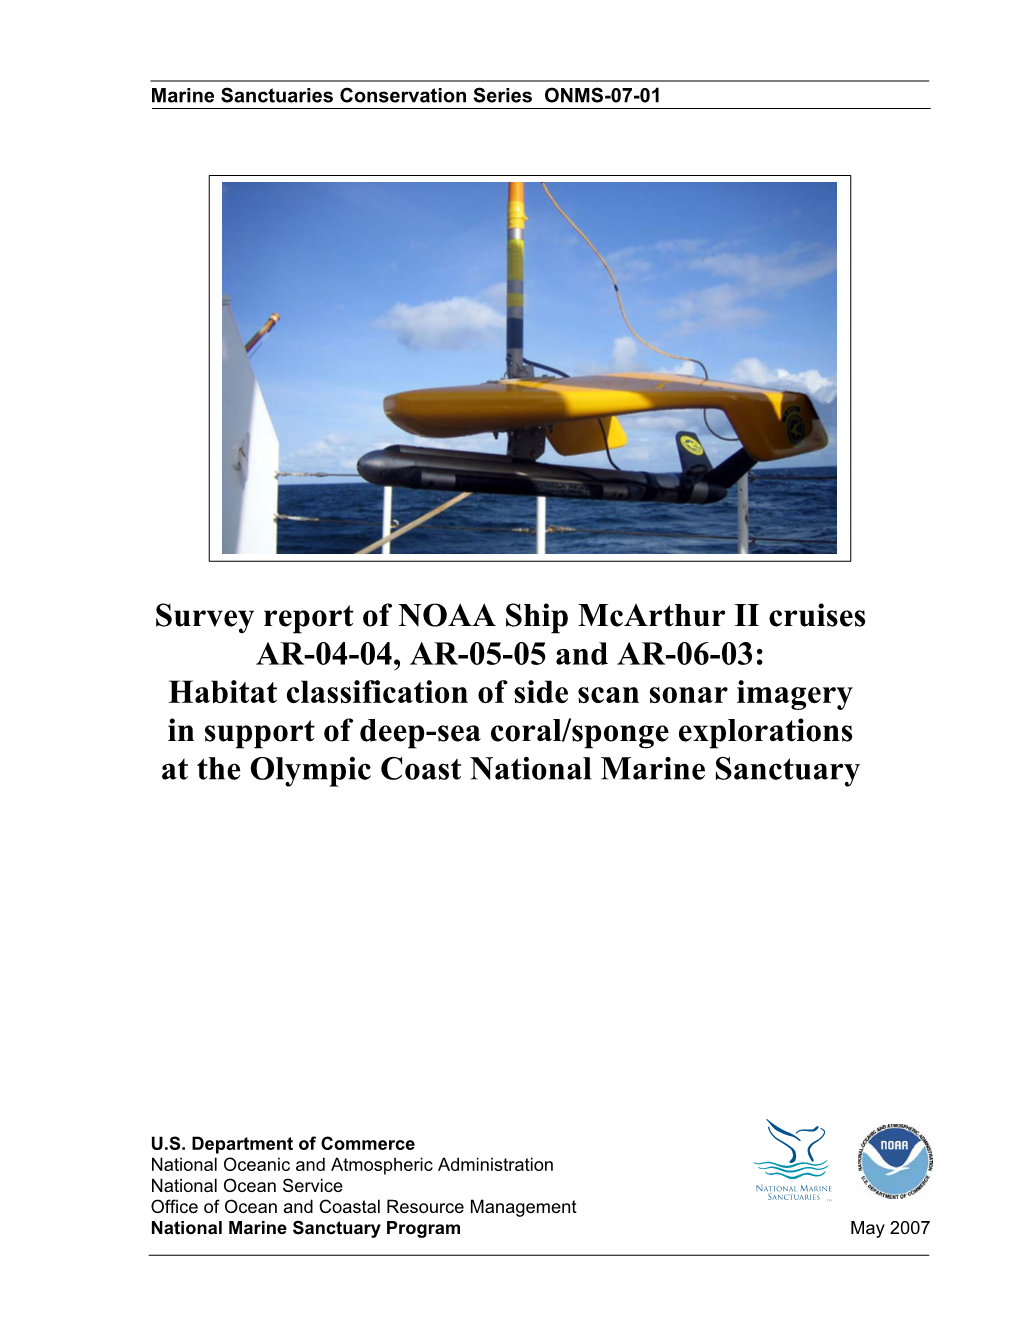 Survey Report of NOAA Ship Mcarthur II Cruises AR-04-04, AR-05